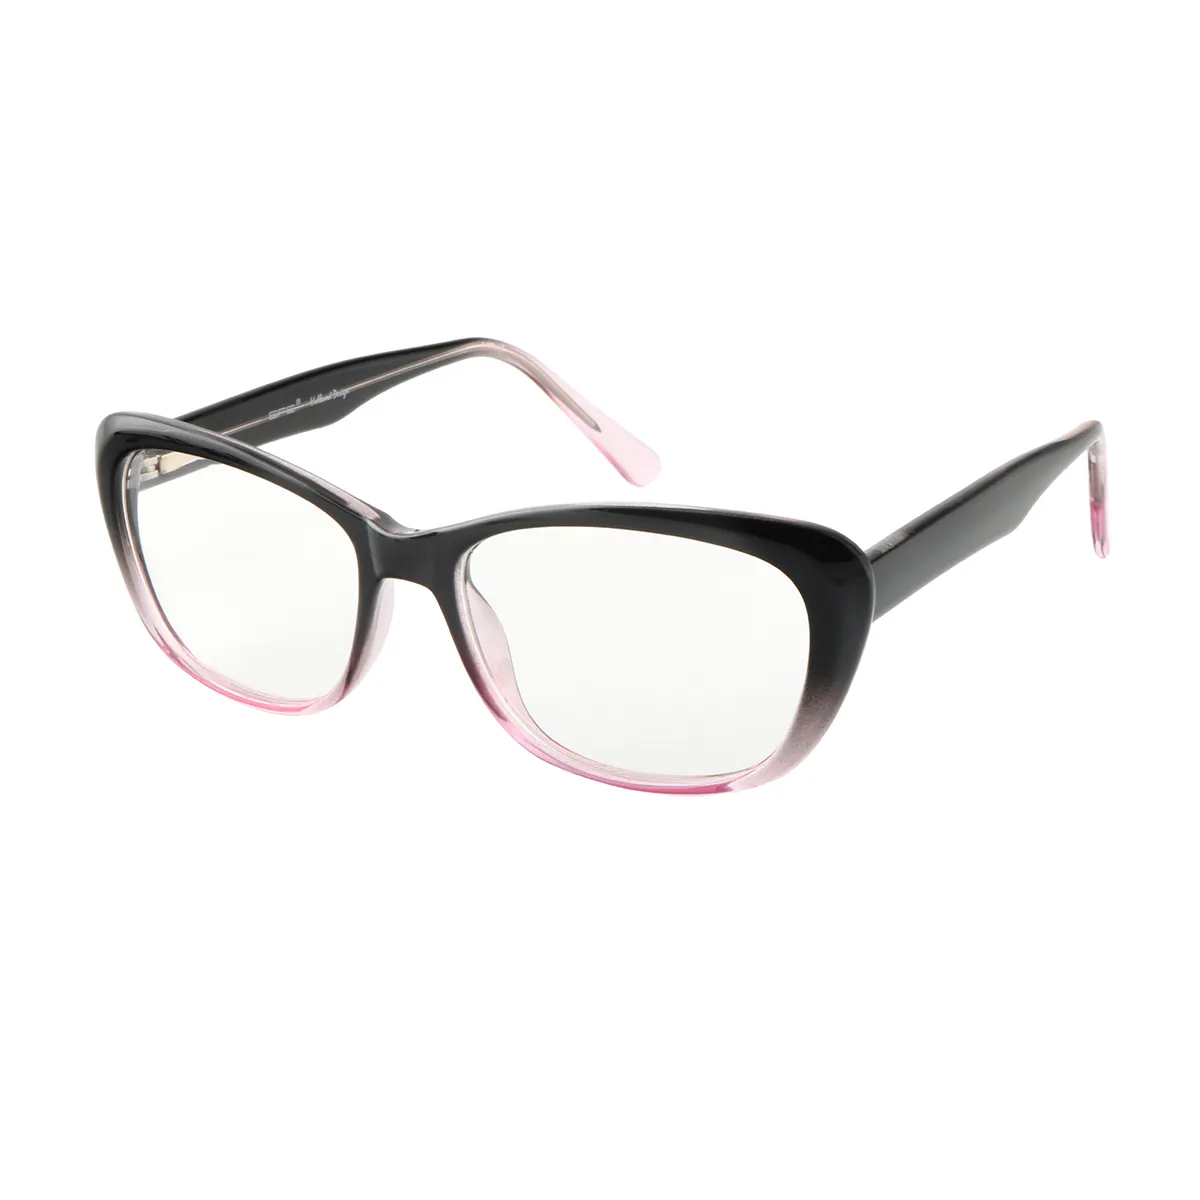 Olivia - Oval Transparent-pink Glasses for Women